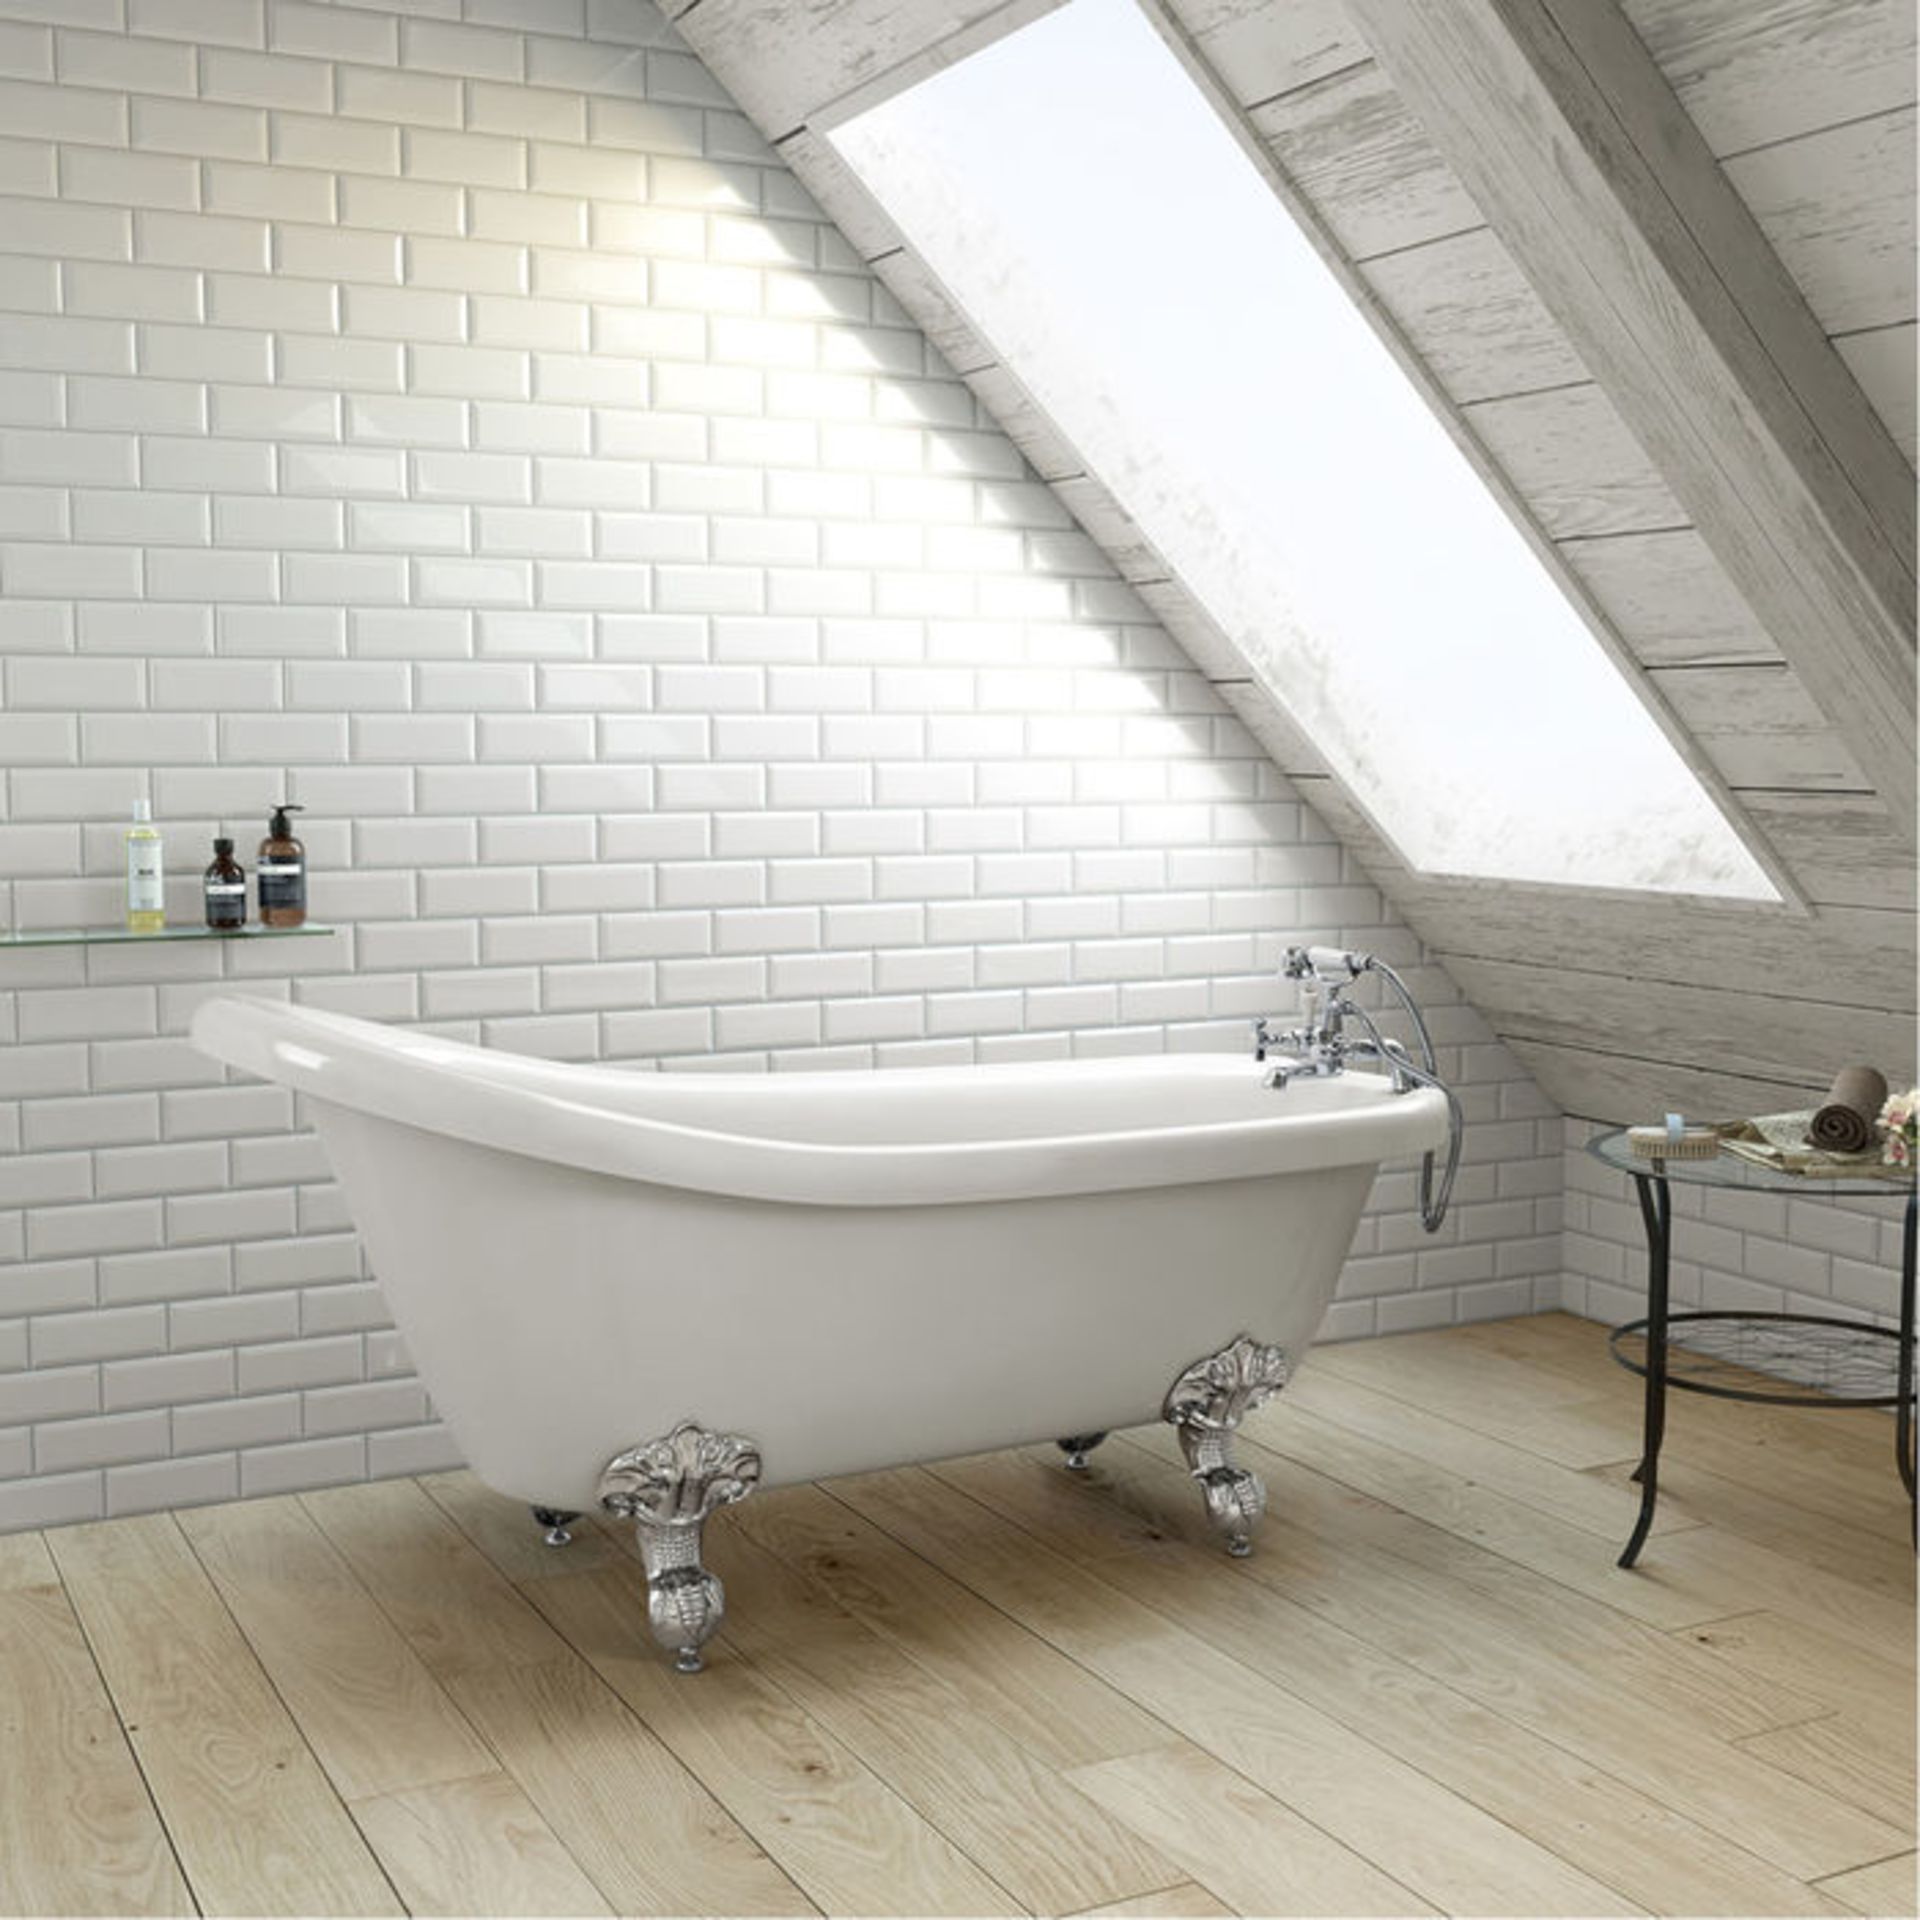 Brand New (QW5) 1550mm Cambridge Traditional Roll Top Slipper Bath - Ball Feet. RRP £899.99. Bath ma - Image 4 of 4